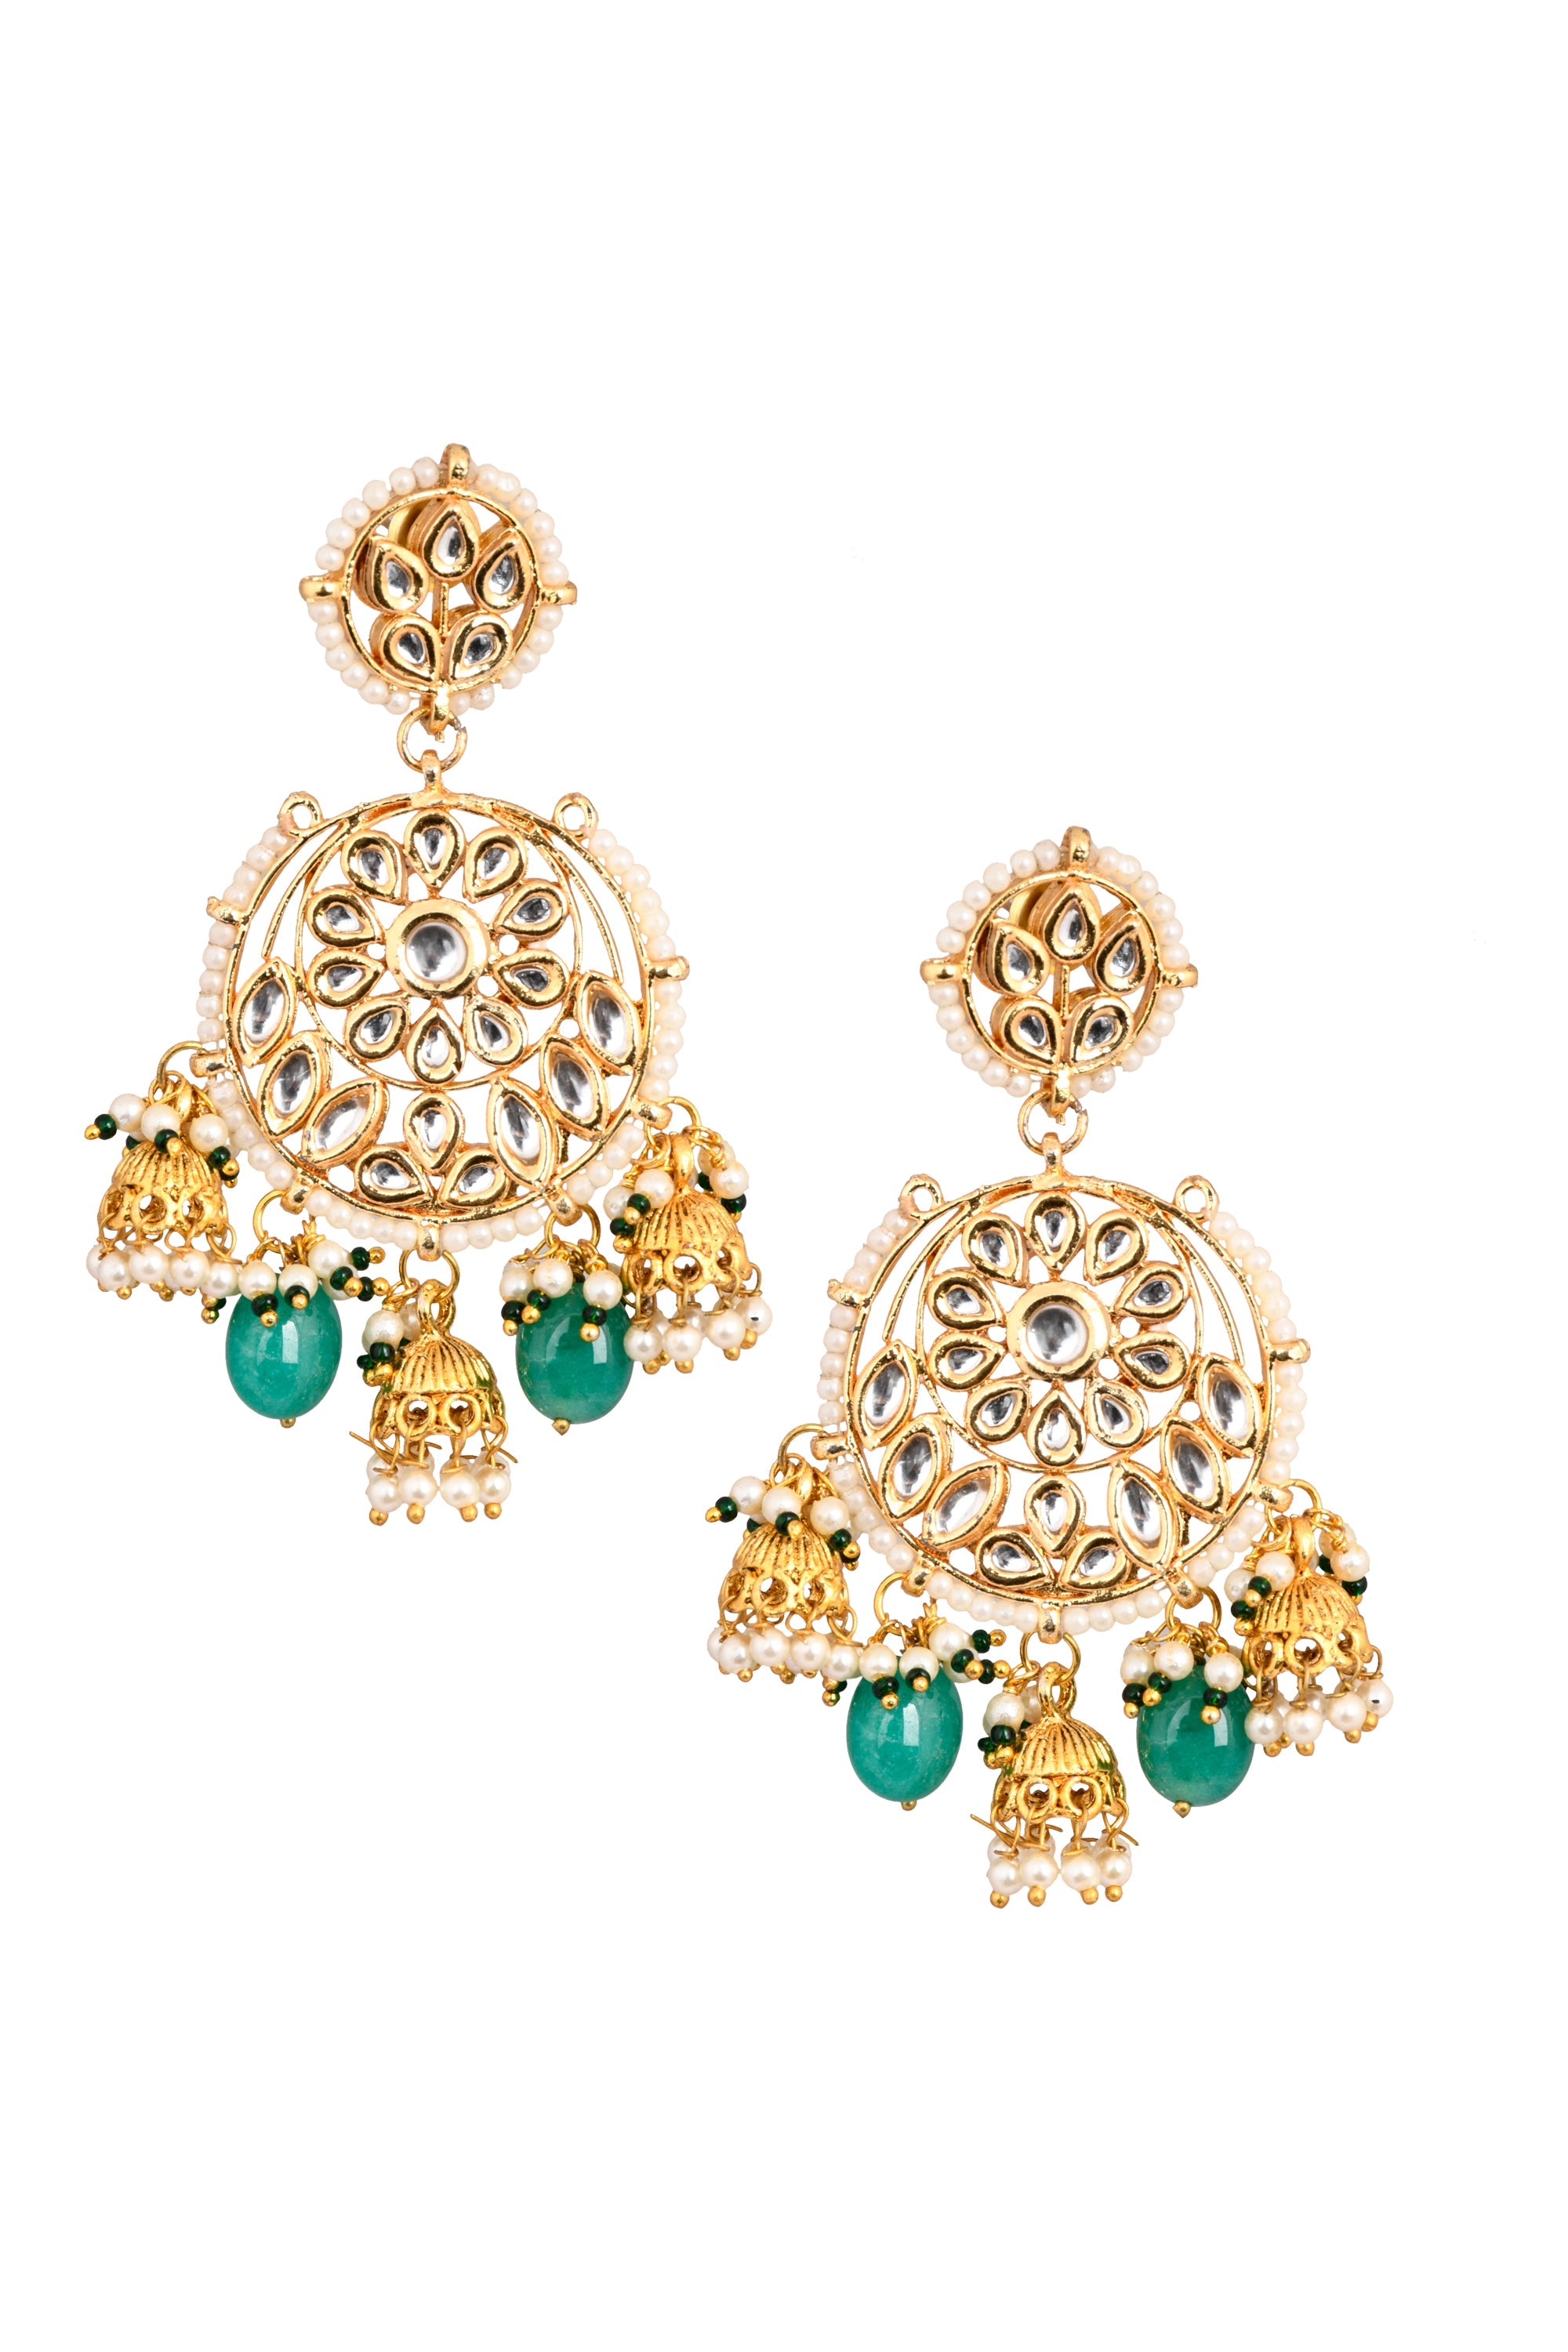 Floral Kundan earrings with hanging jhumki